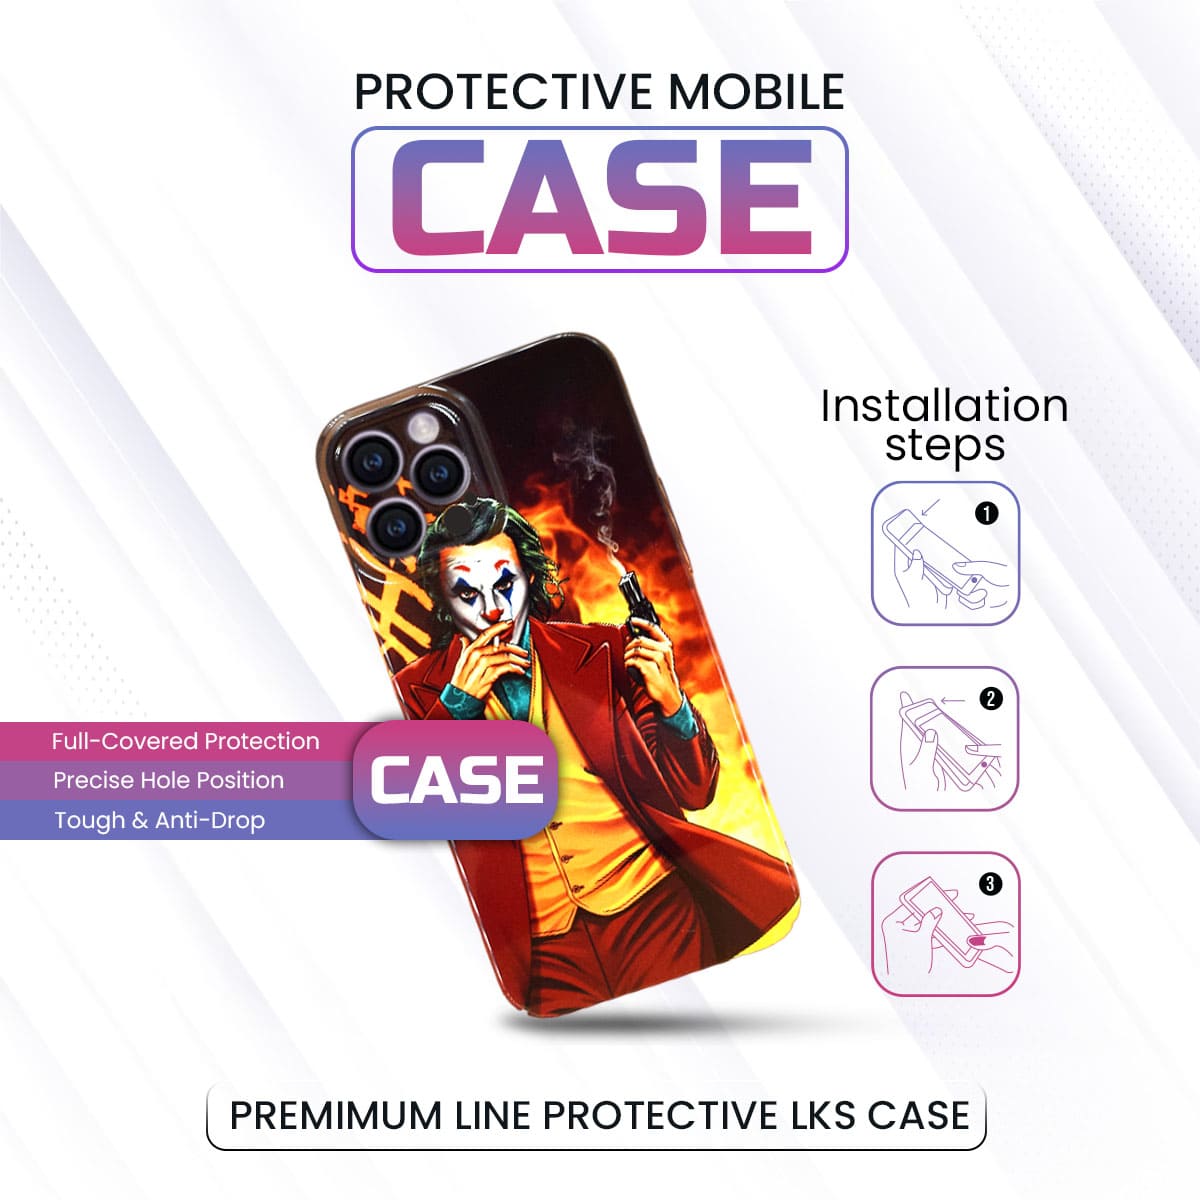 iPhone Joker Printed Case